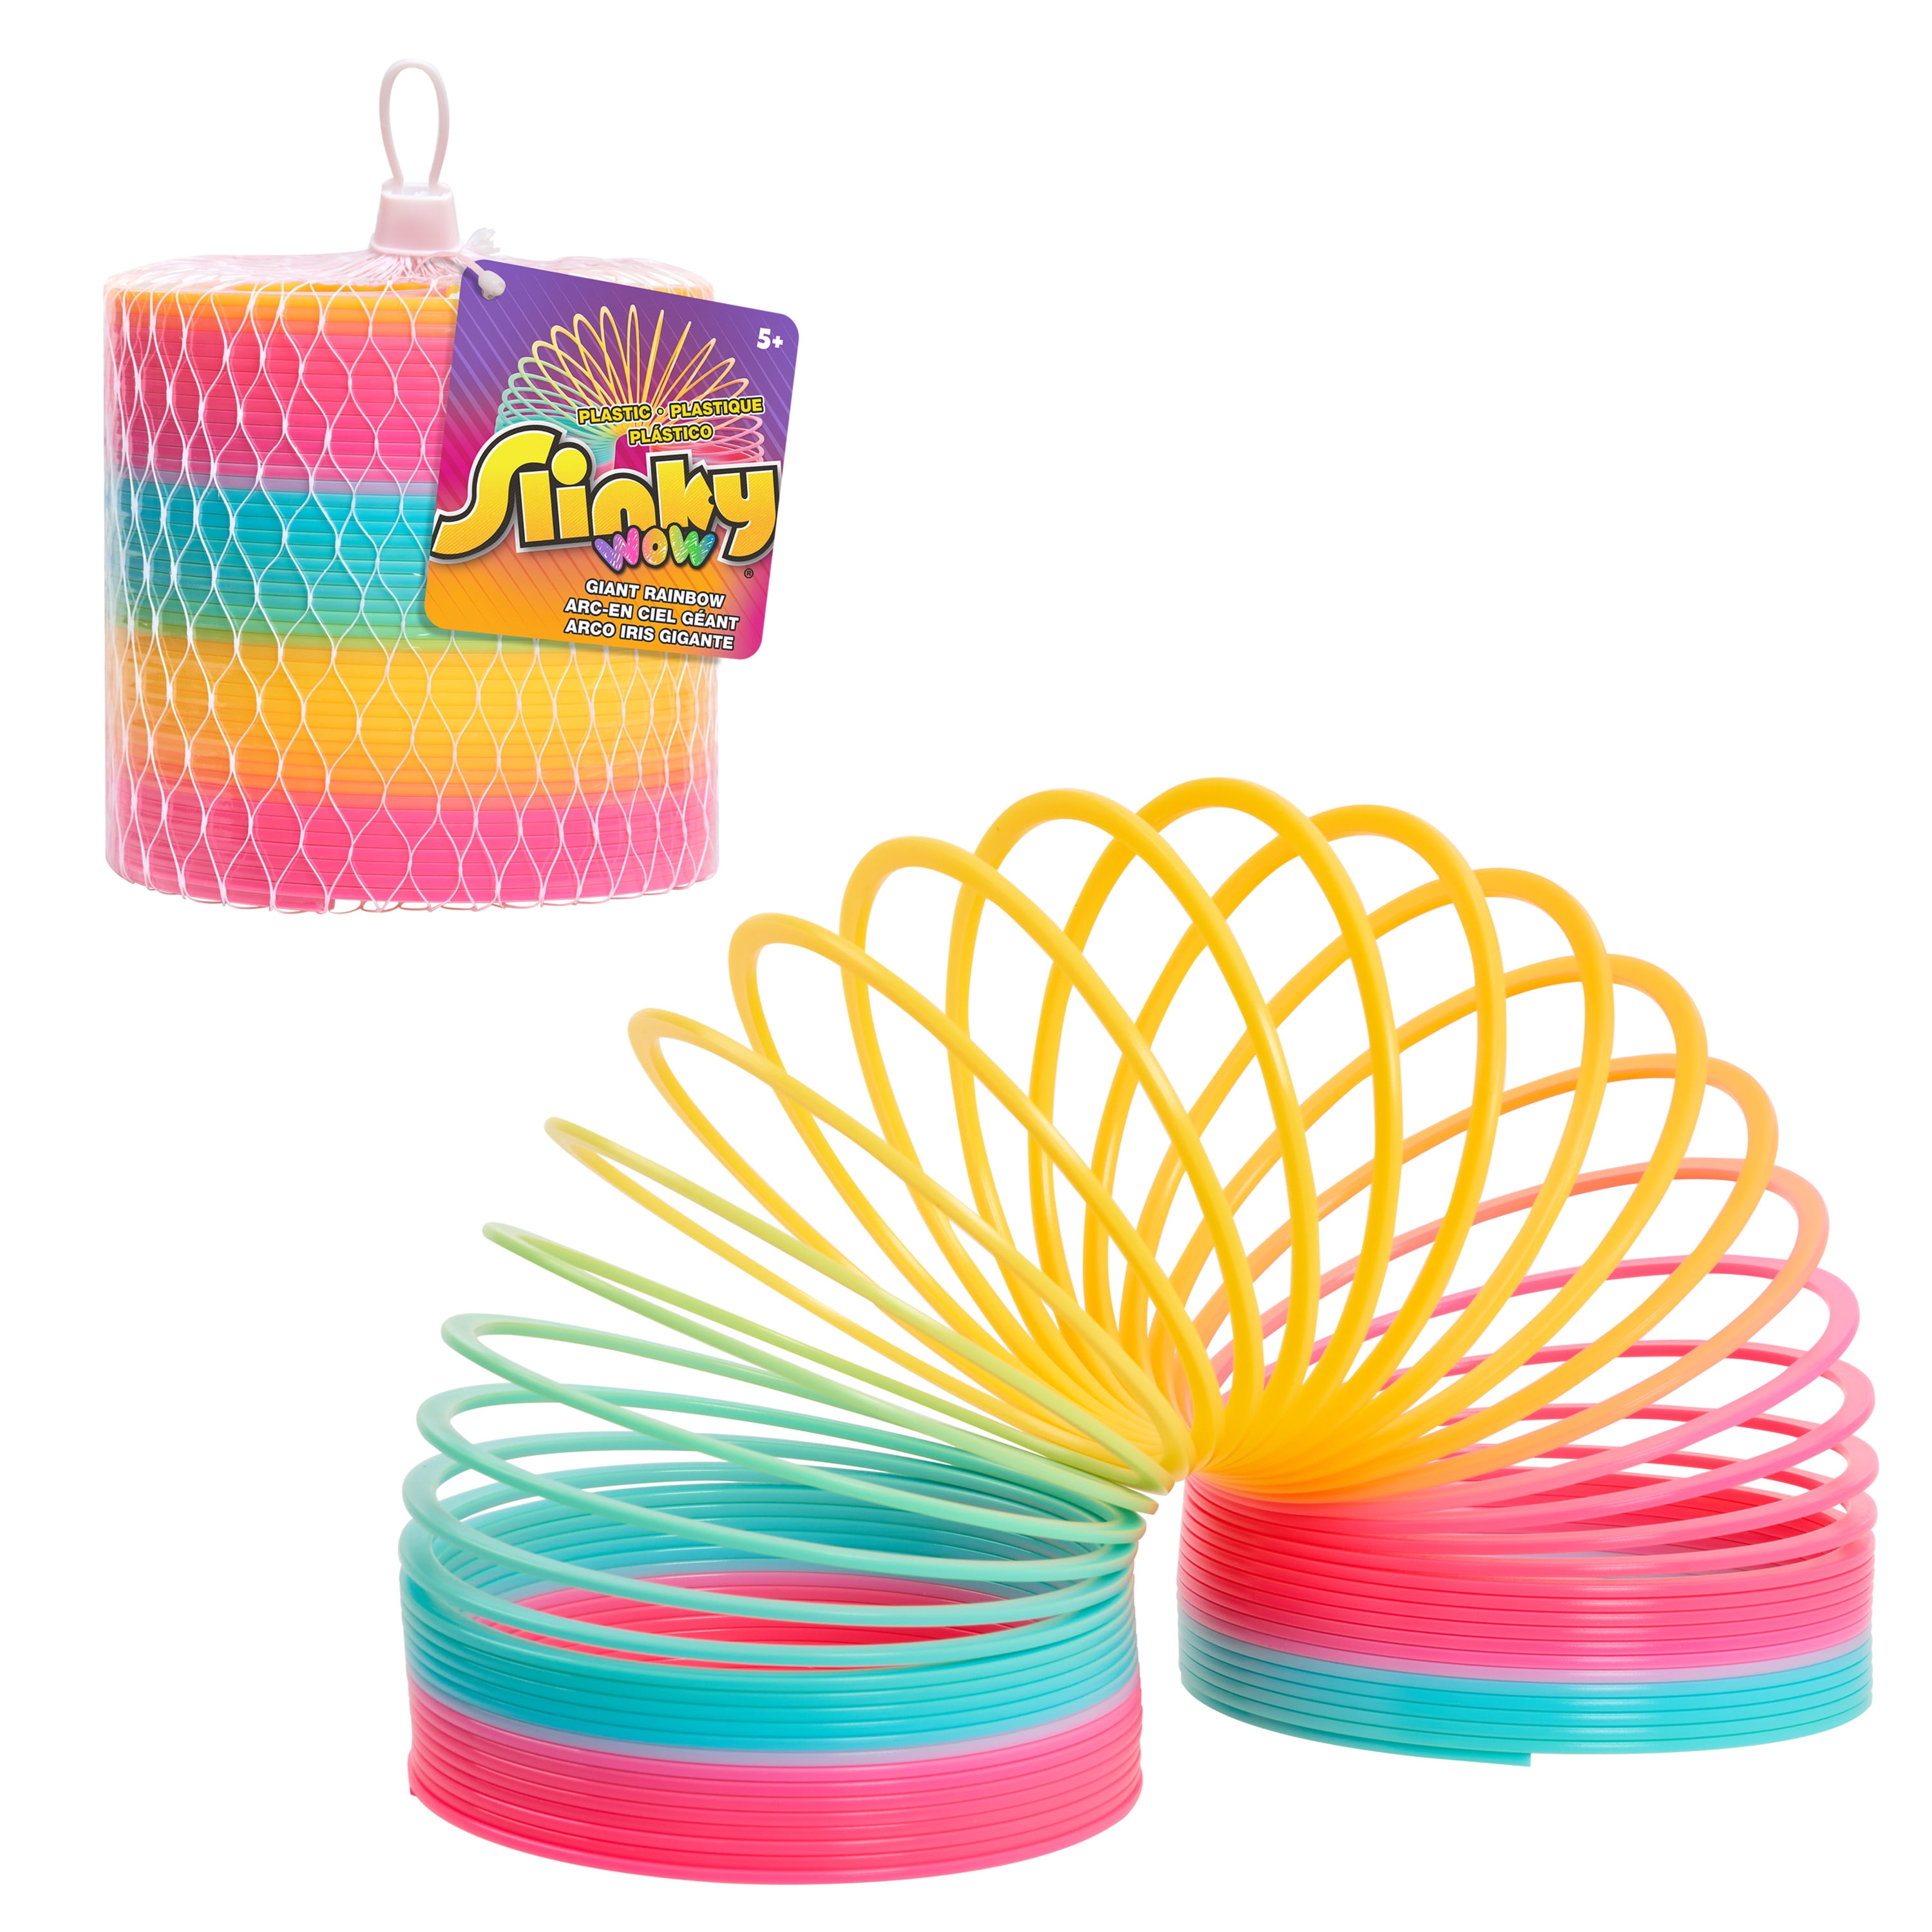 Giant Slinky ToyOriginal Metal Slinky ToySlinky SpringSlinky Metal Toy 